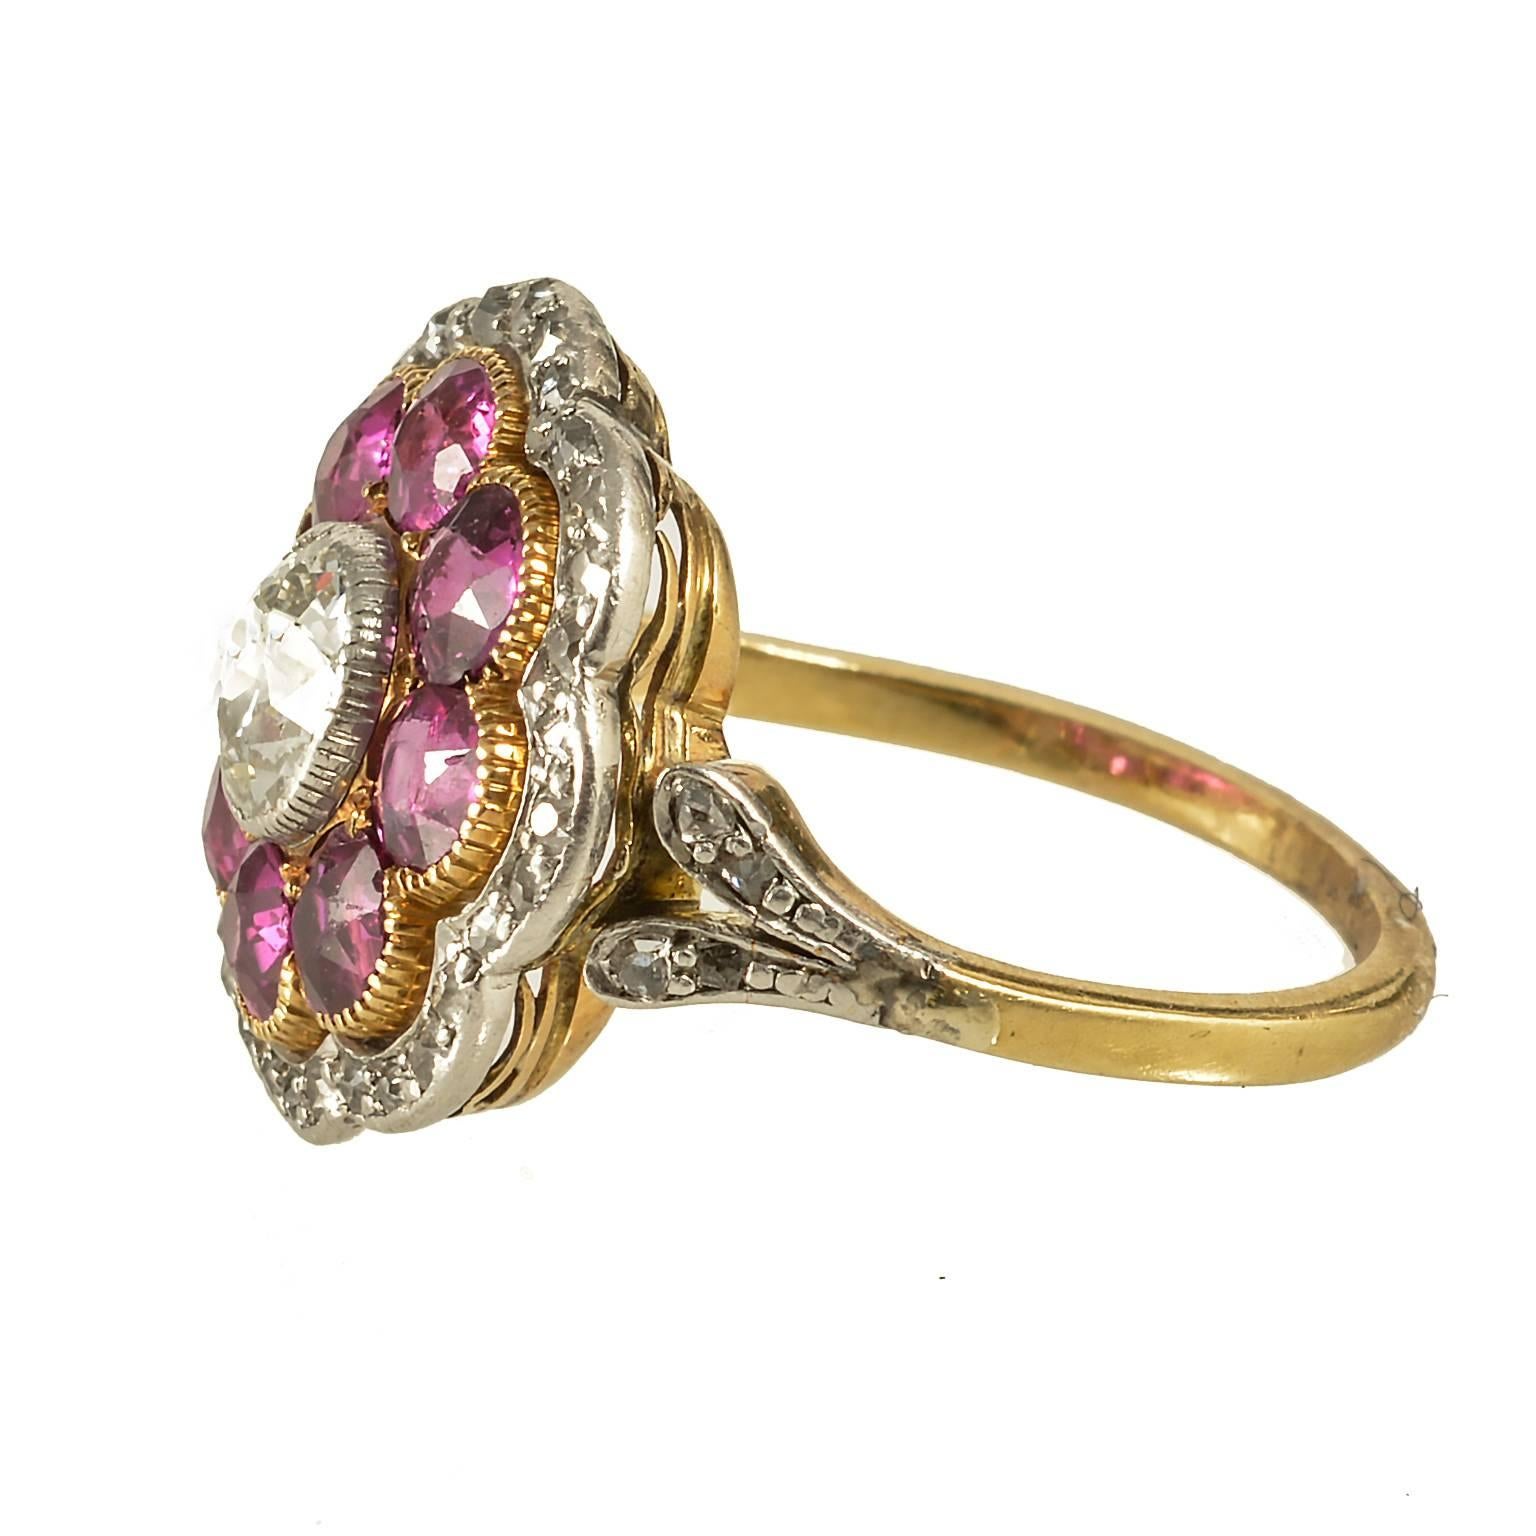 Edwardian natural unheated burmese rubies and diamond cluster ring
platinum on gold set